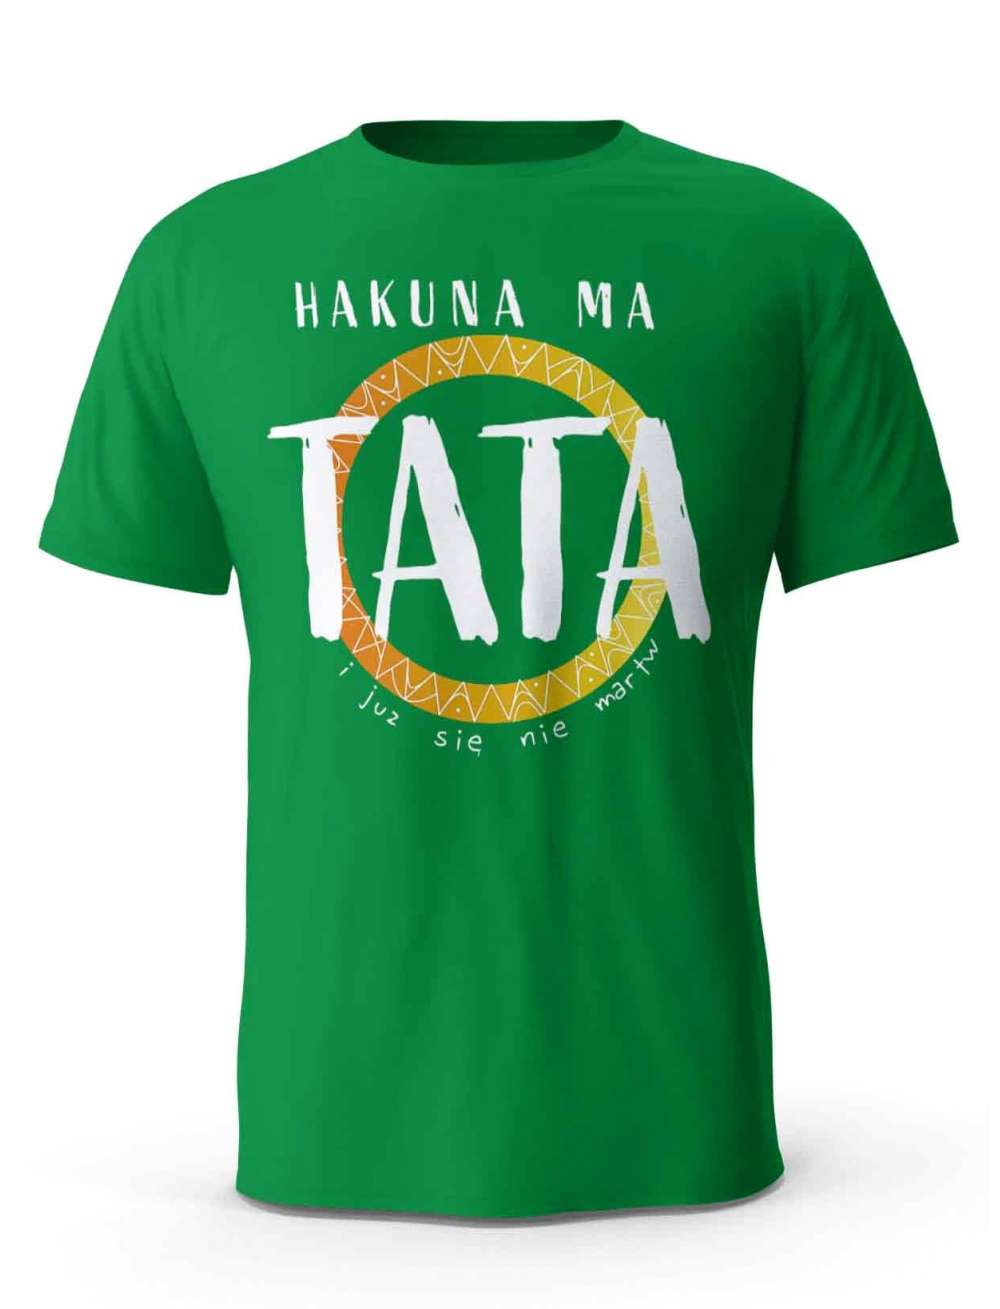 Koszulka Hakuna Ma Tata Zółta , T-shirt dla taty